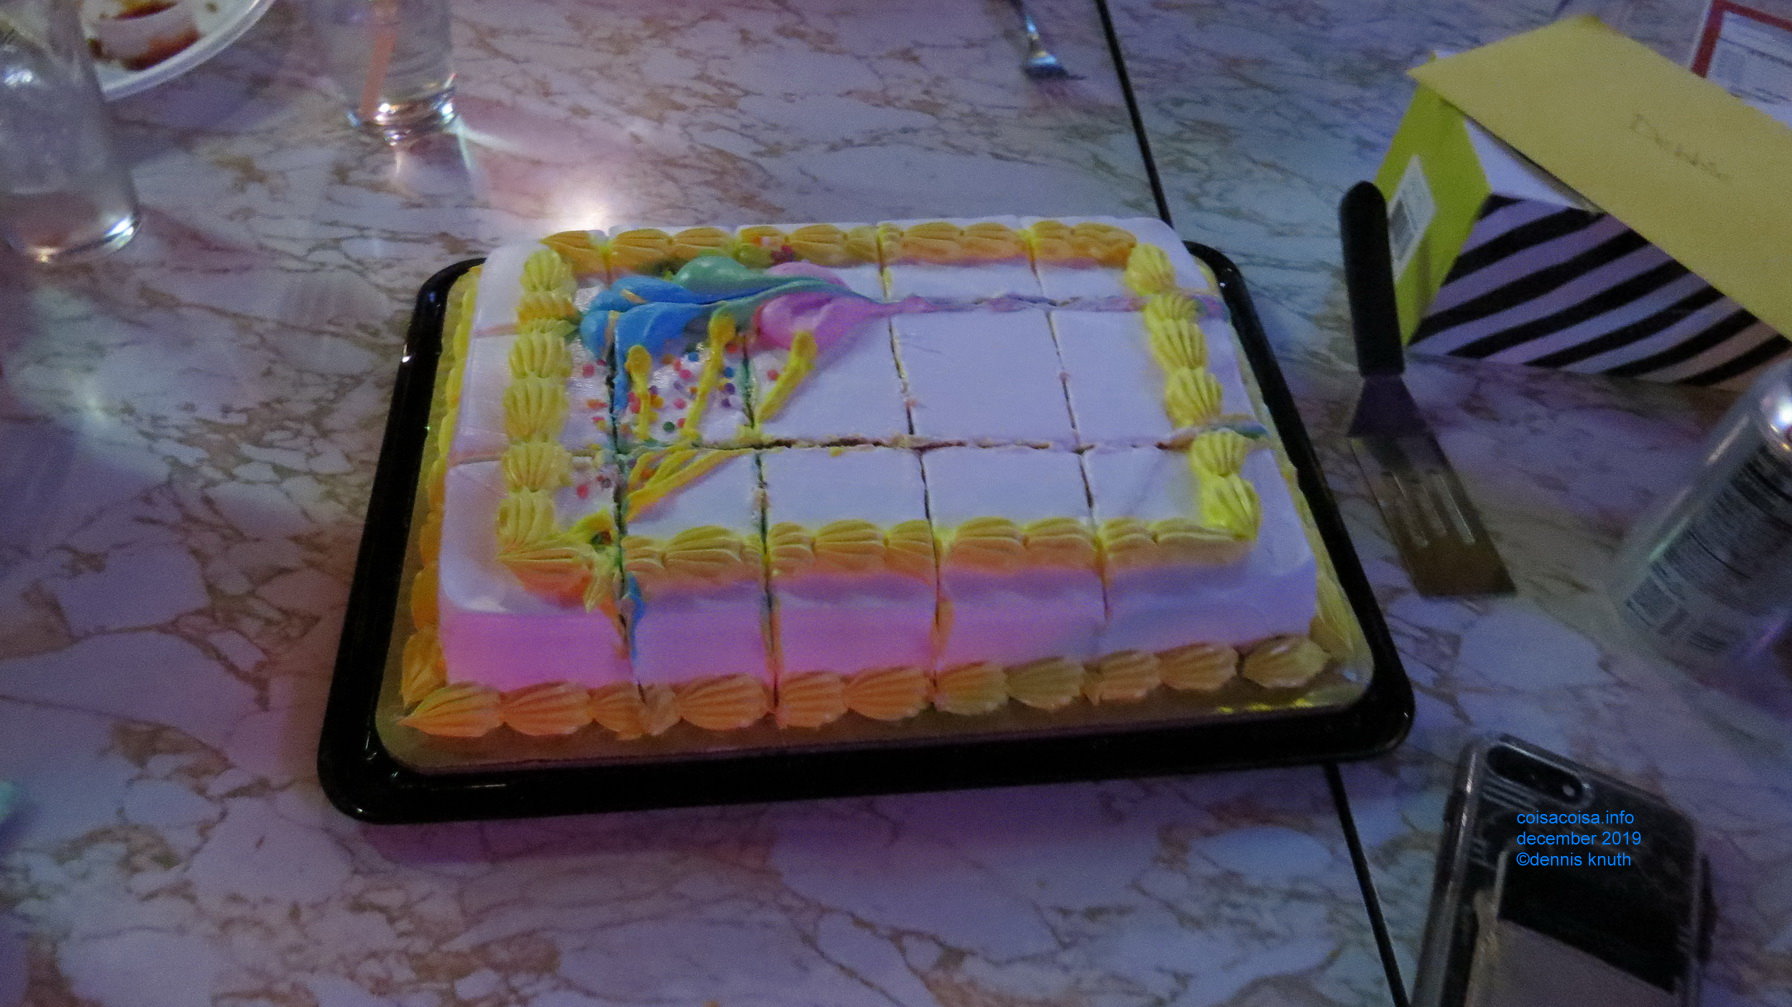 Debbie's 2019 December Birthday Cake